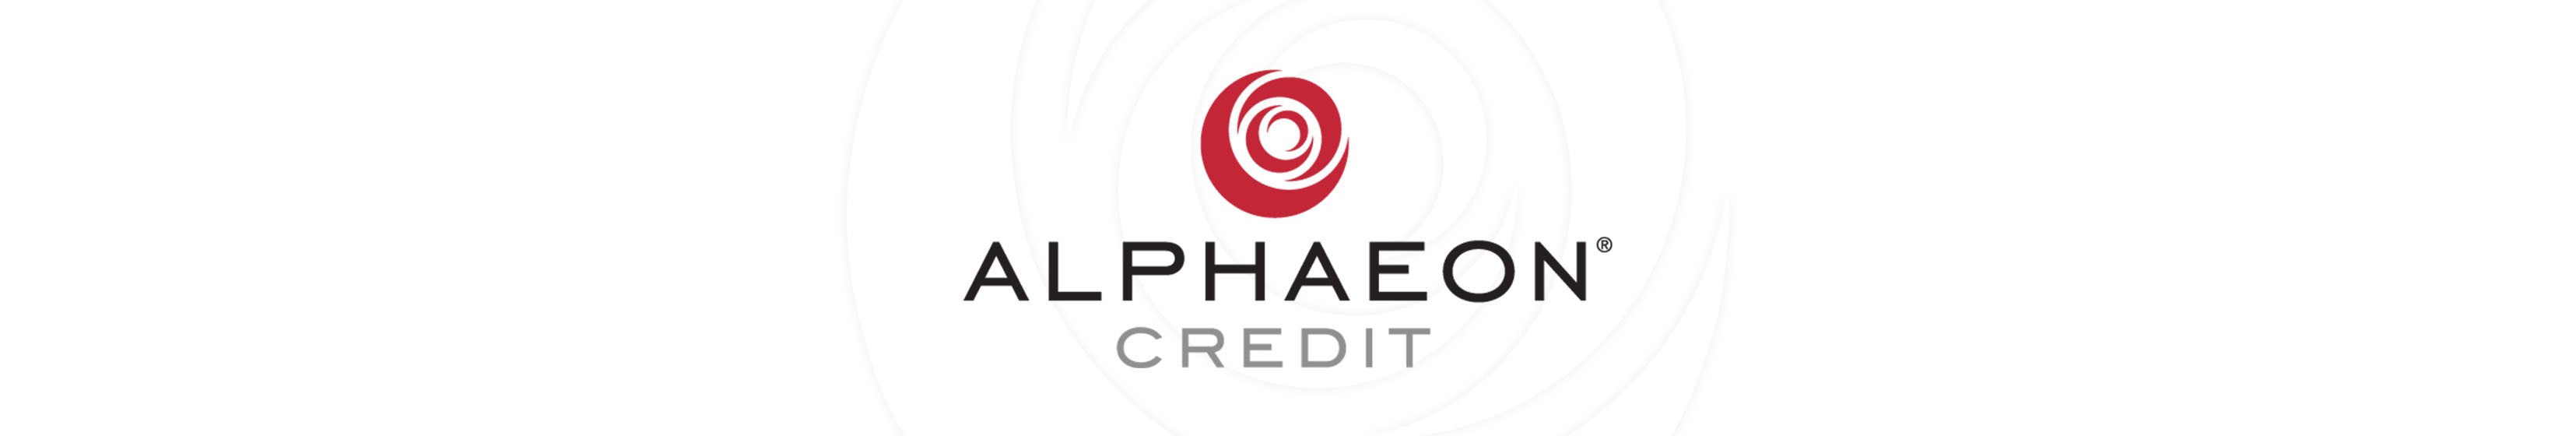 alphaeon credit card customer service number